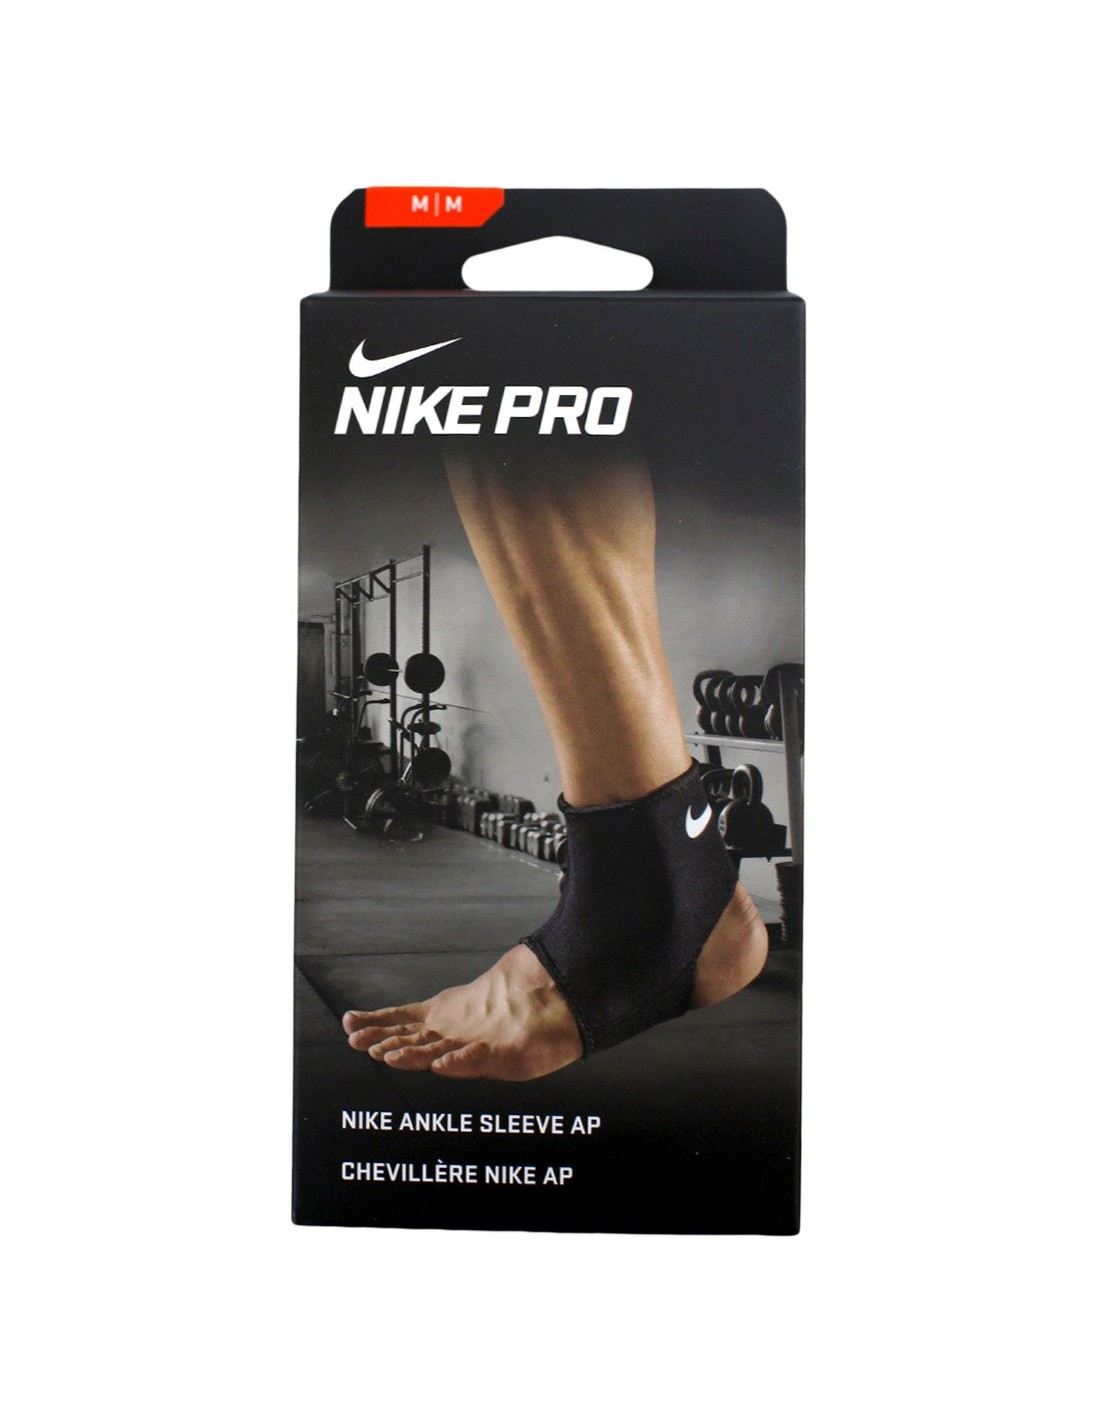 Odiseo Dormido Polvoriento Tobillera Nike Pro Ankle Sleeve 2.0 importada- 18 cuotas en OndaSports